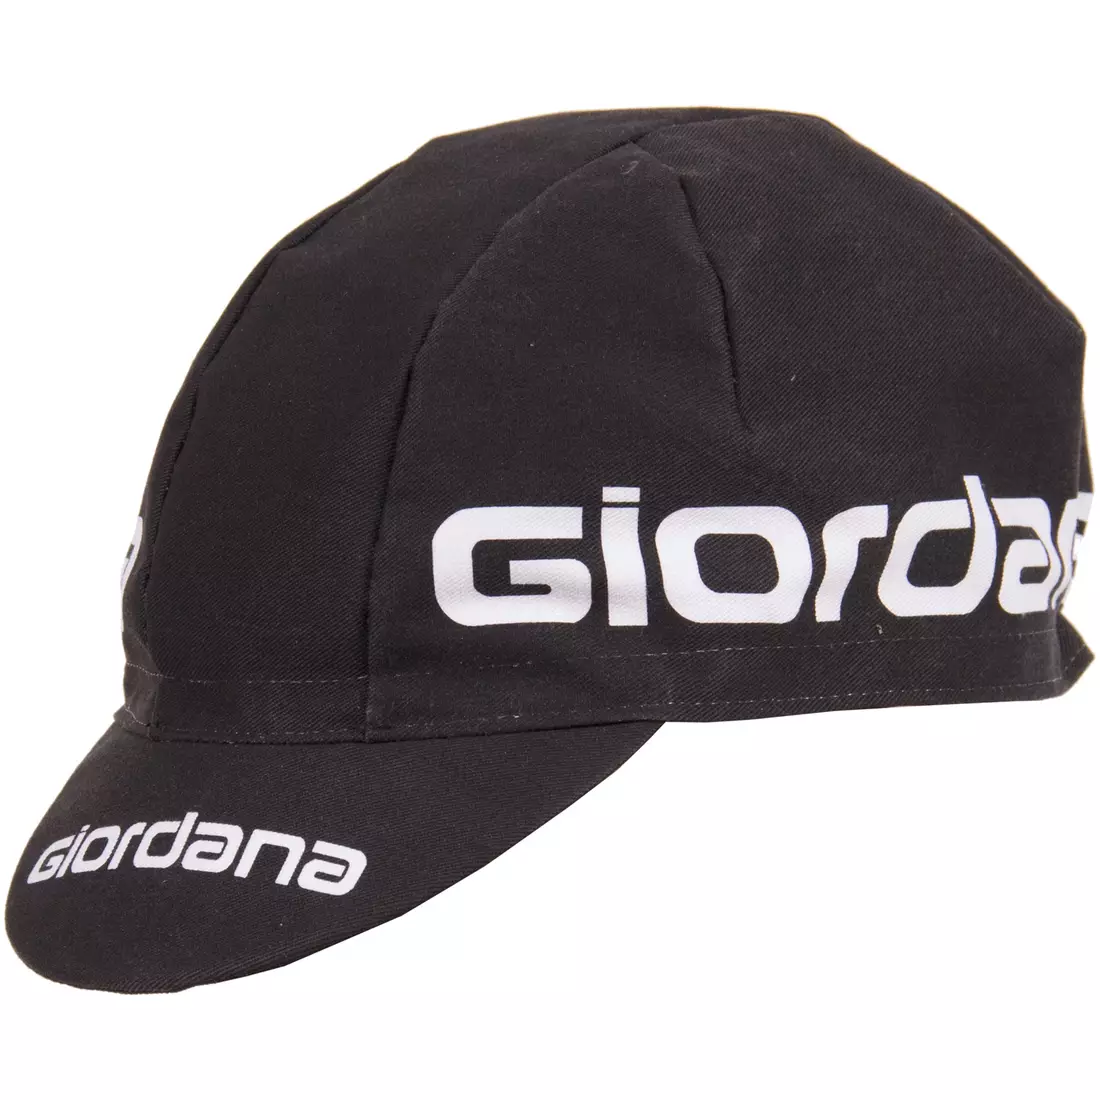 GIORDANA SS18 cycling cap - Giordana Logo - Black GI-S5-COCA-GIOR-BLCK one size